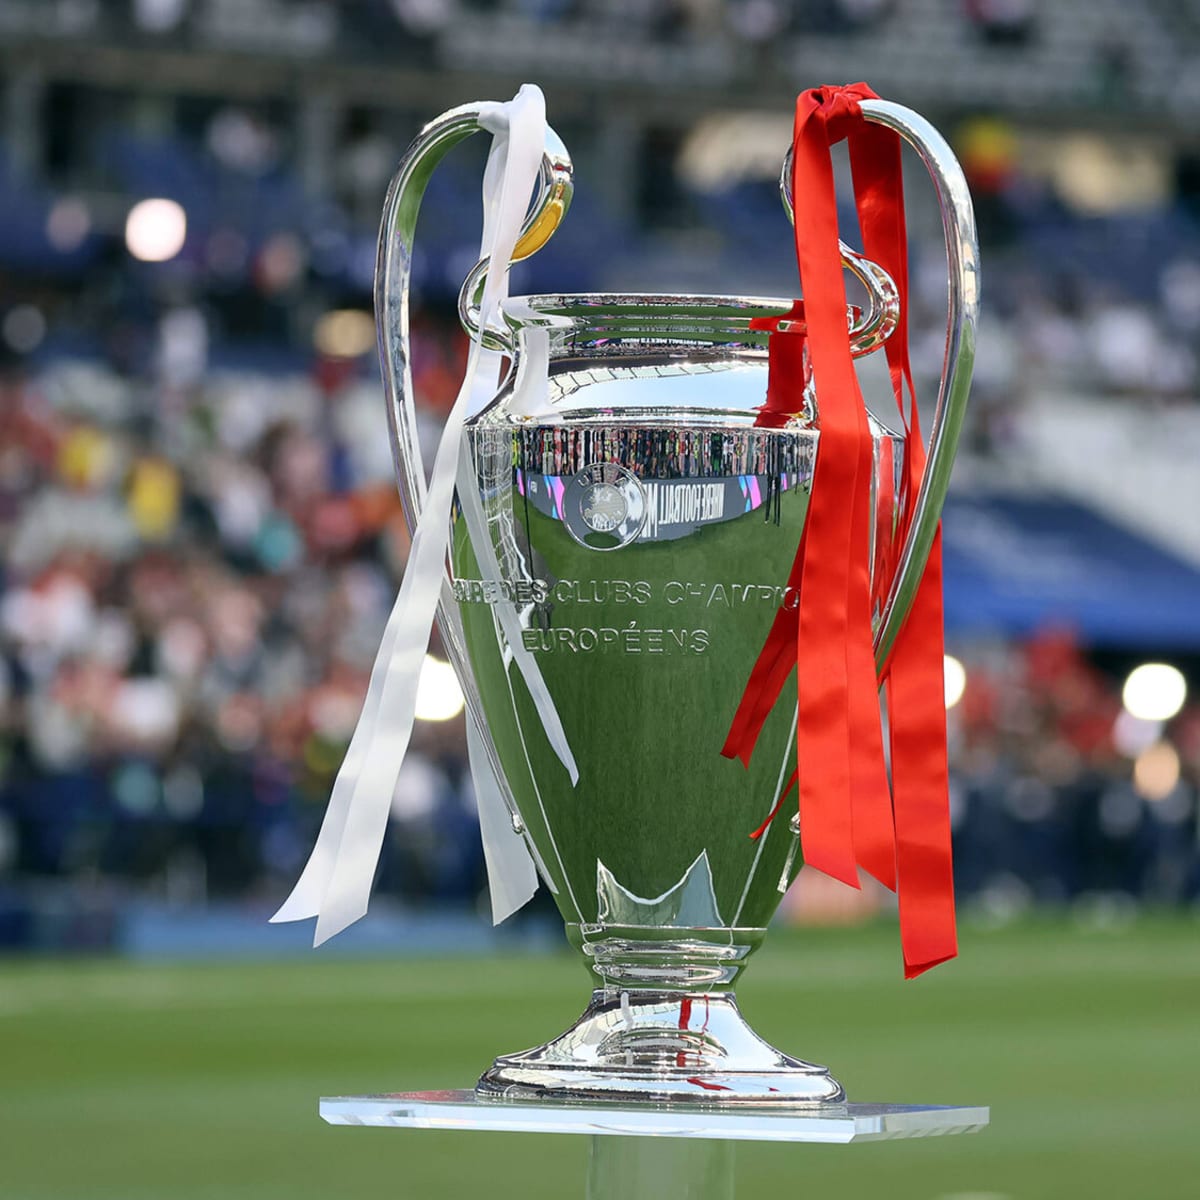 LIVE UPDATES: 2022/2023 UEFA Champions League draw